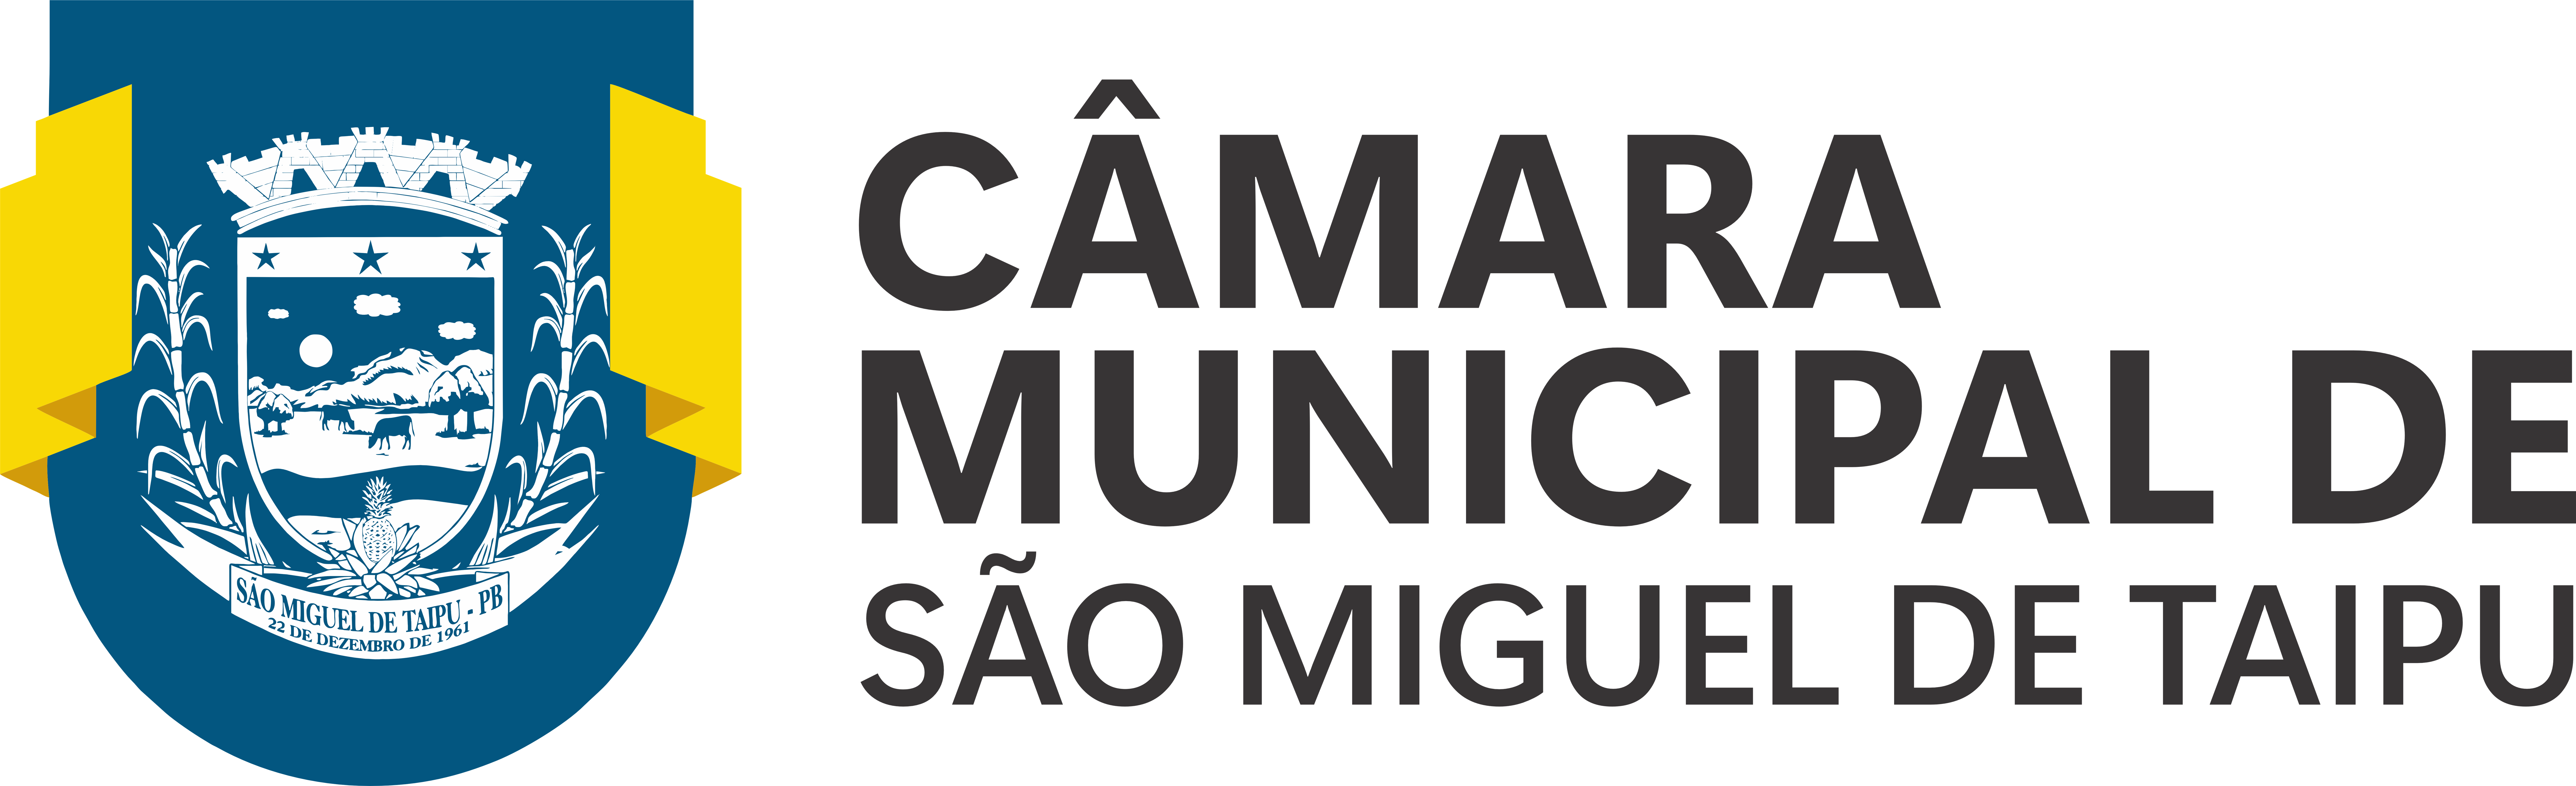 Câmara Municipal de Vereadores de Ibarama - Rio Grande do Sul